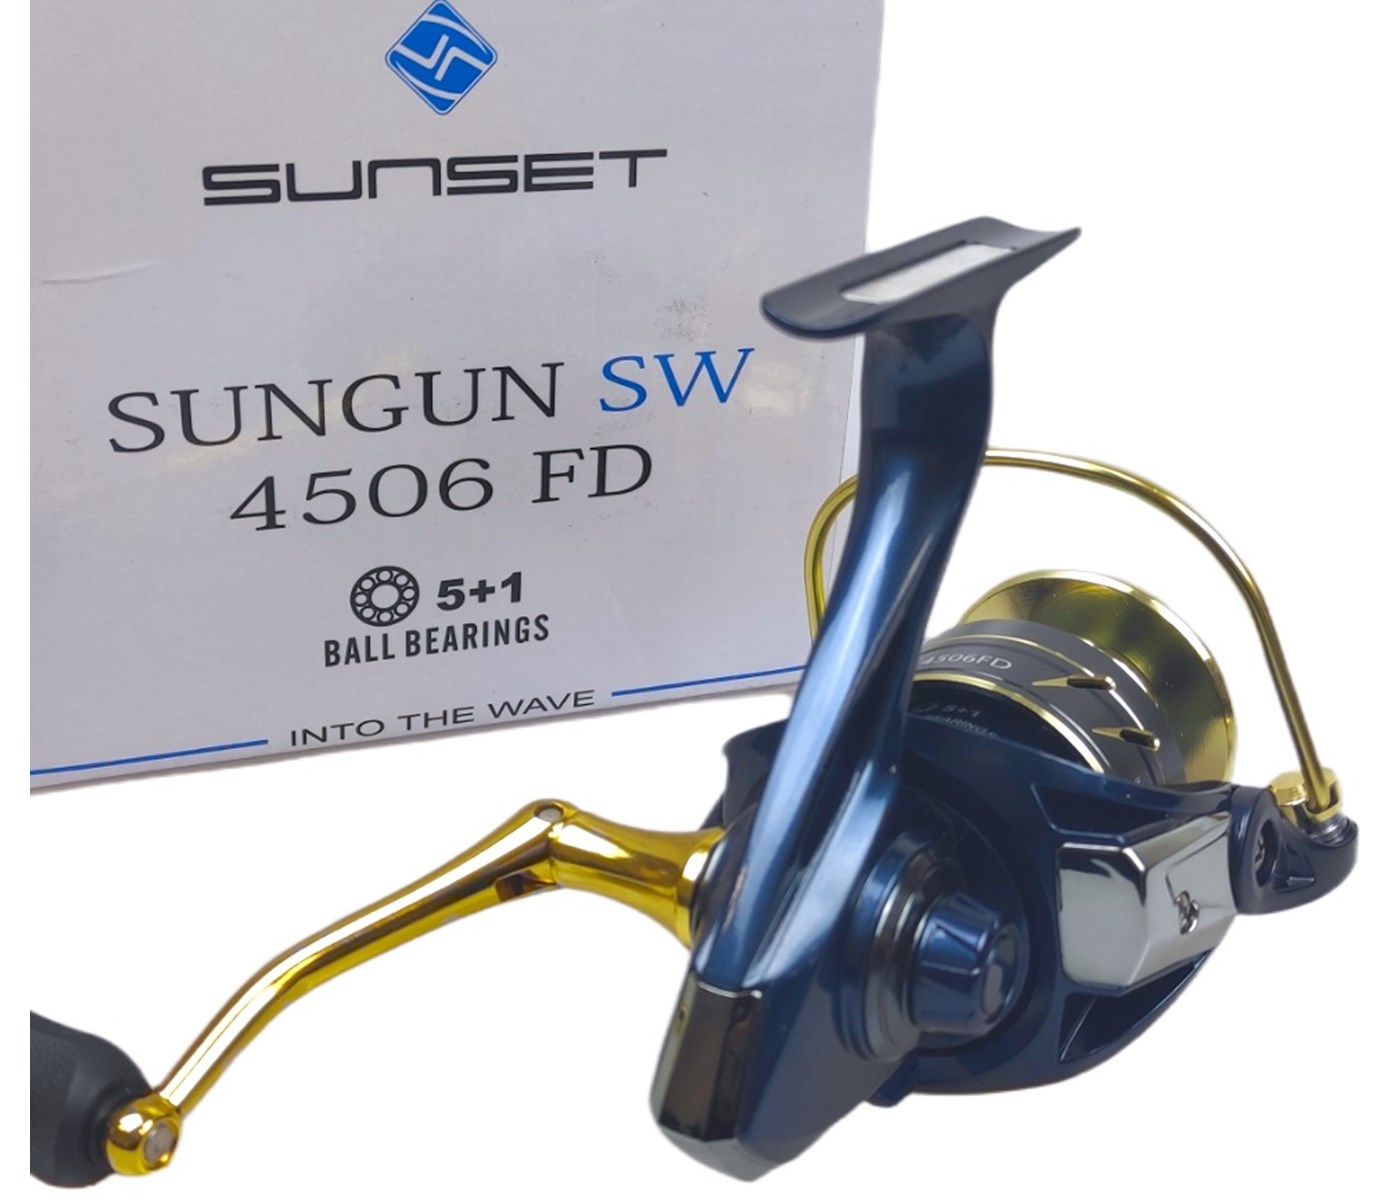 SUNSET ROLA SUNGUN SW 4506 FD 